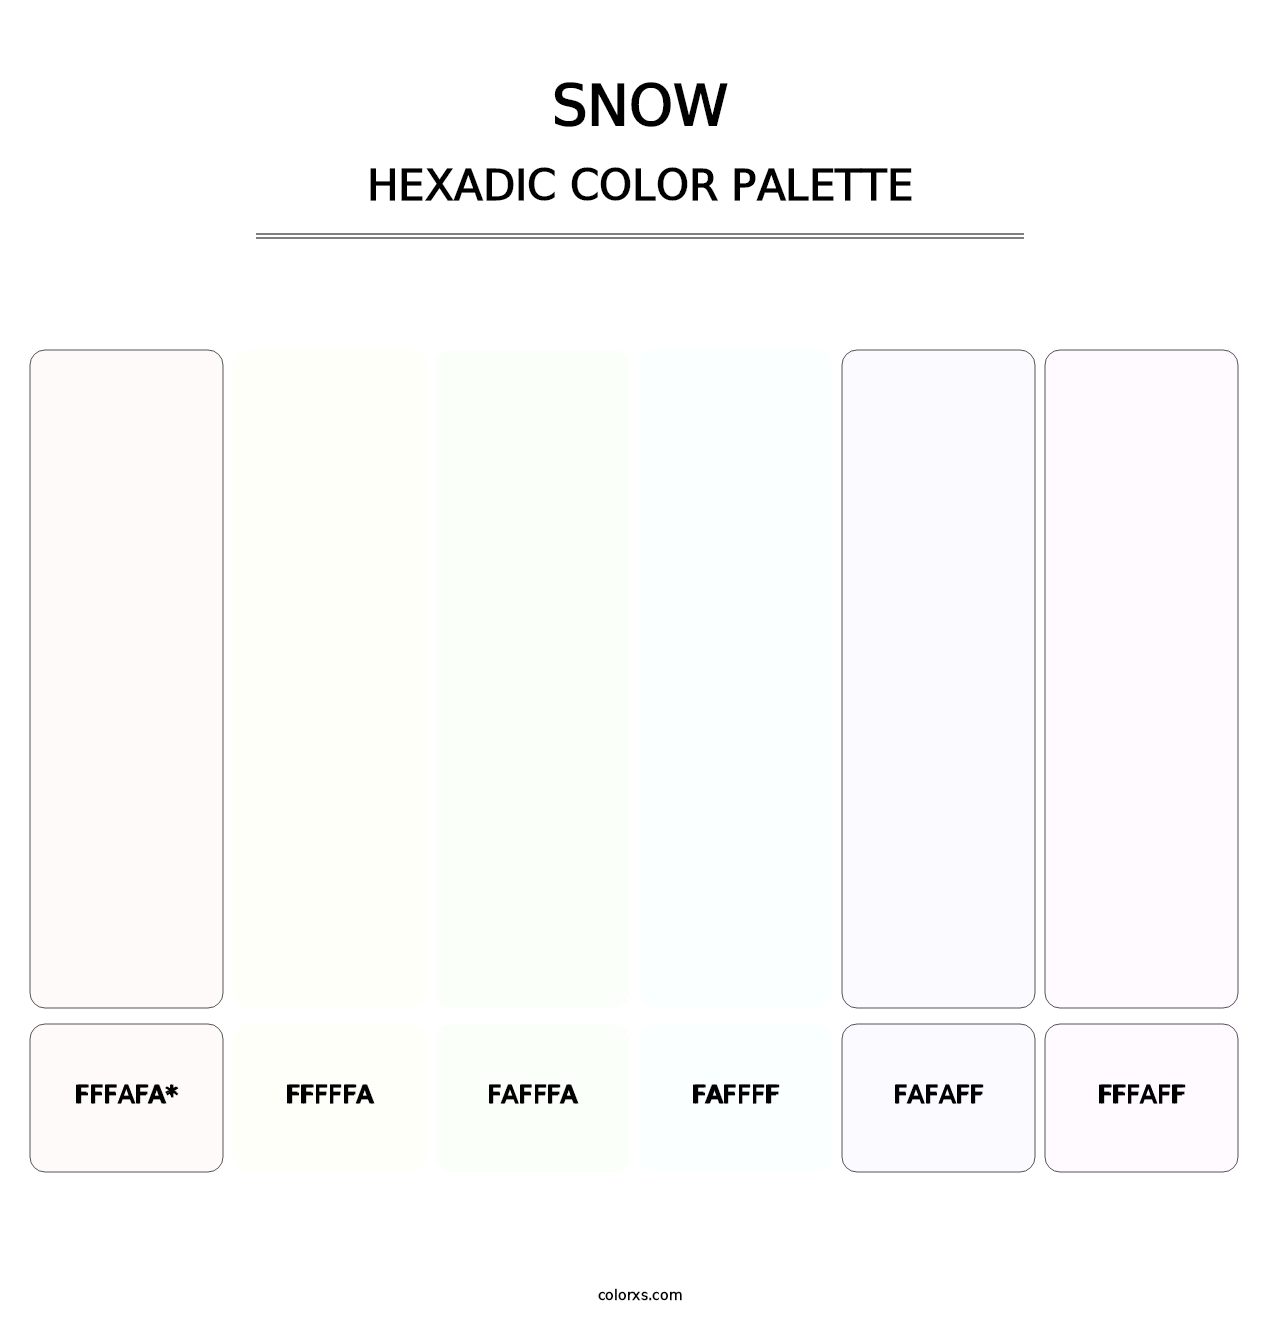 Snow - Hexadic Color Palette